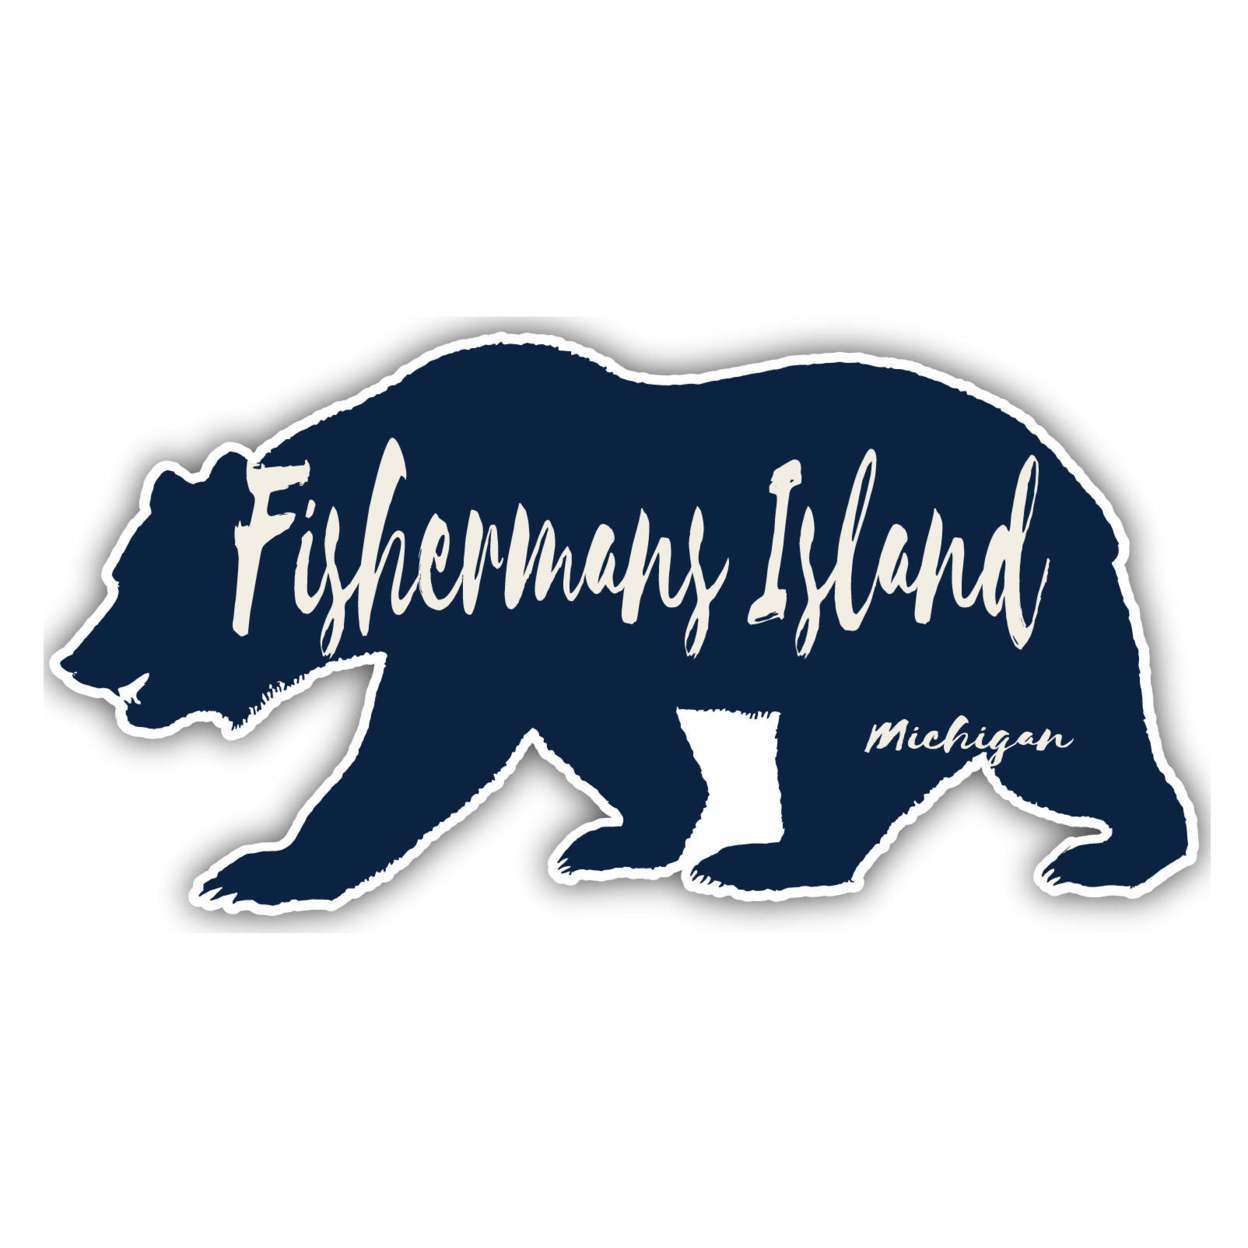 Fishermans Island Michigan Souvenir Decorative Stickers (Choose Theme And Size) - Single Unit, 4-Inch, Bear